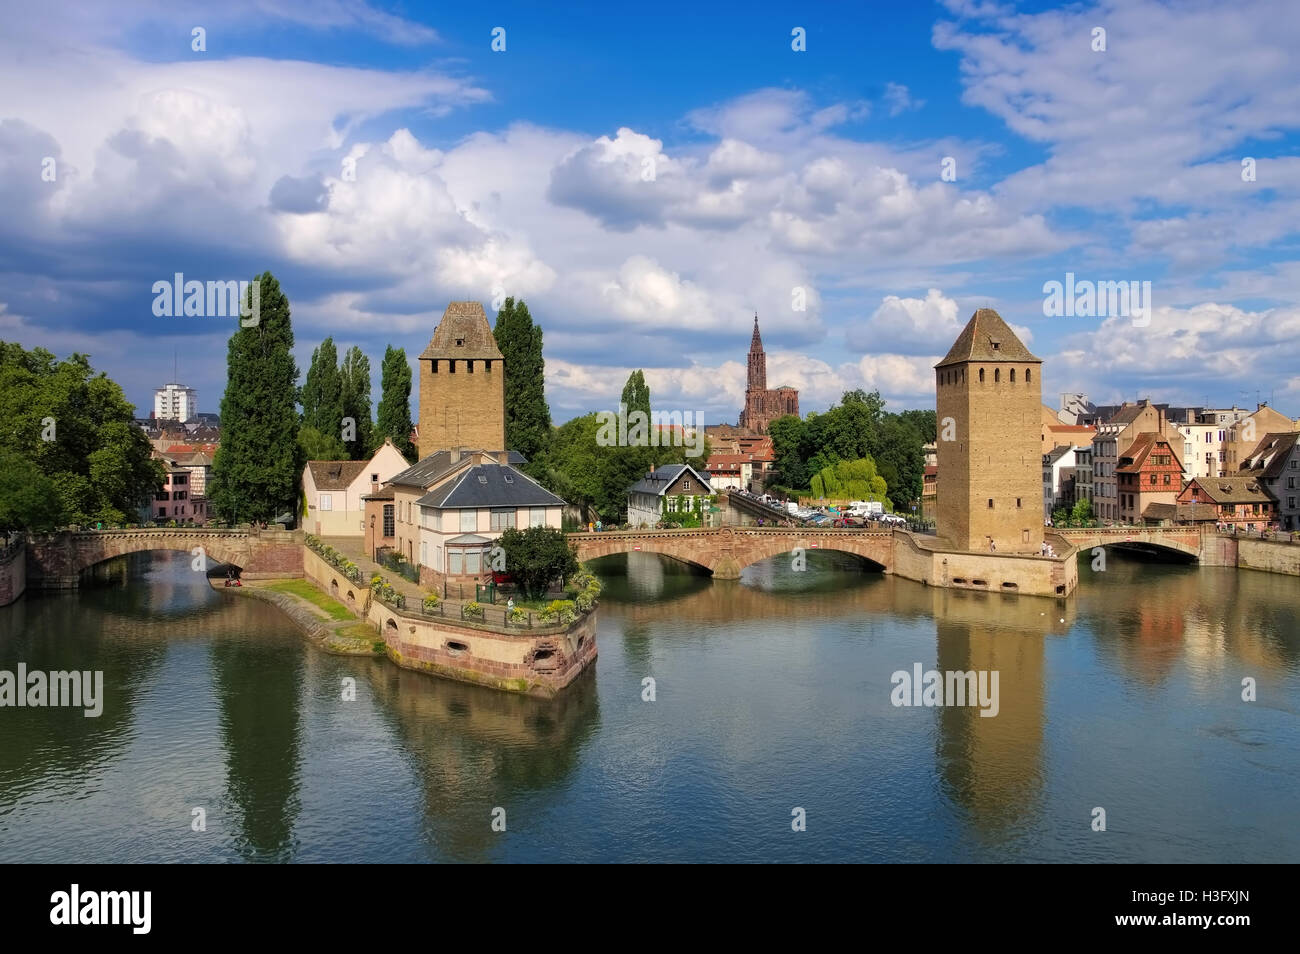 Strassburg im Elsass, Frankreich - skyline Strasbourg in  Alsace, France Stock Photo